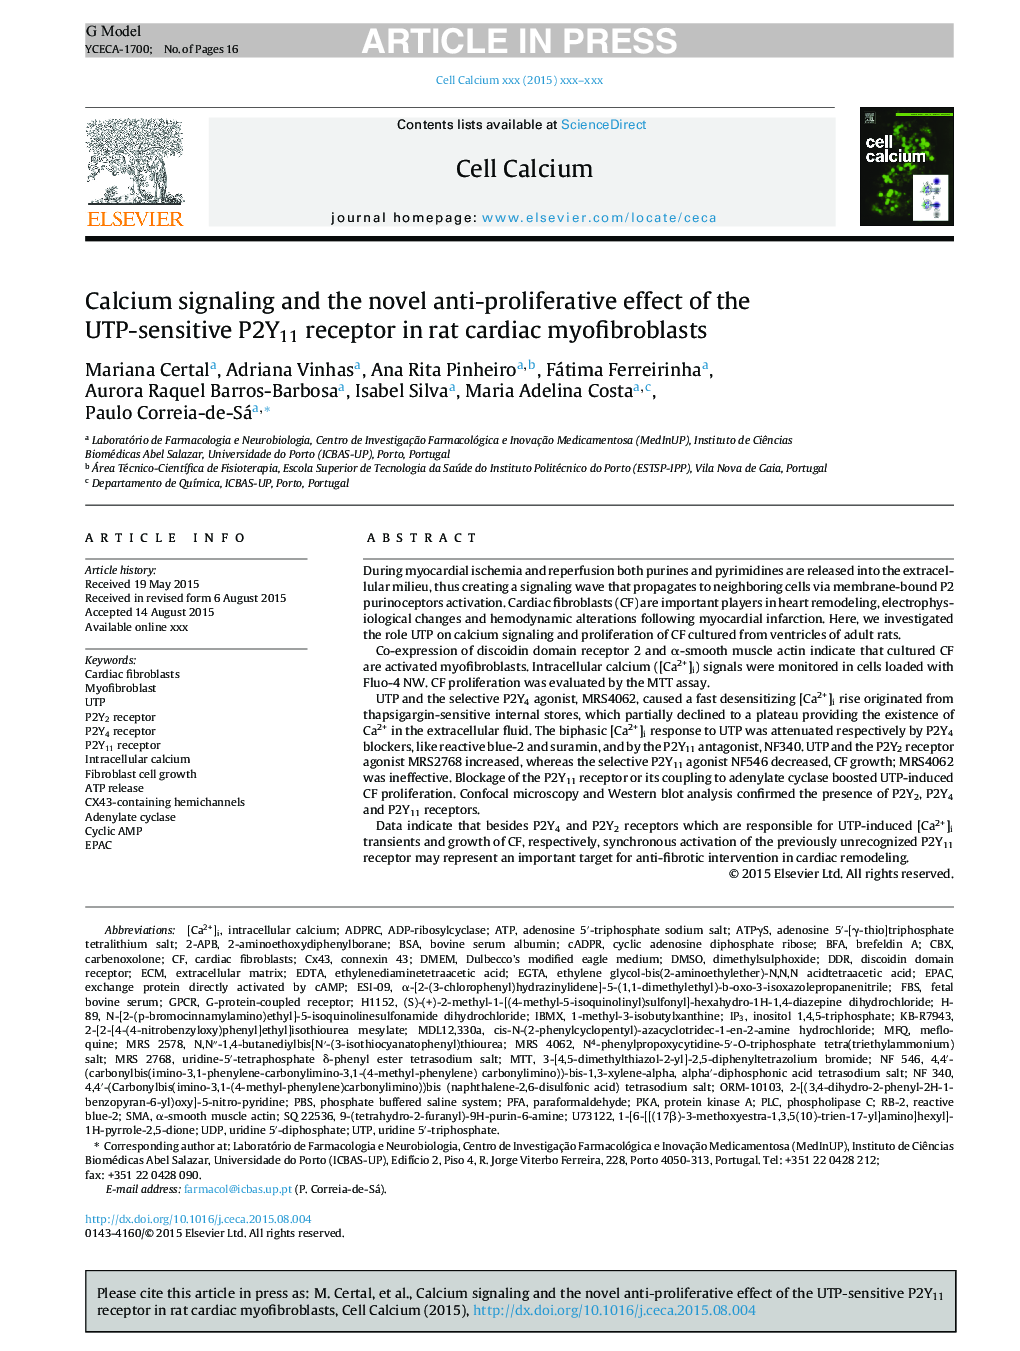 Calcium signaling and the novel anti-proliferative effect of the UTP-sensitive P2Y11 receptor in rat cardiac myofibroblasts